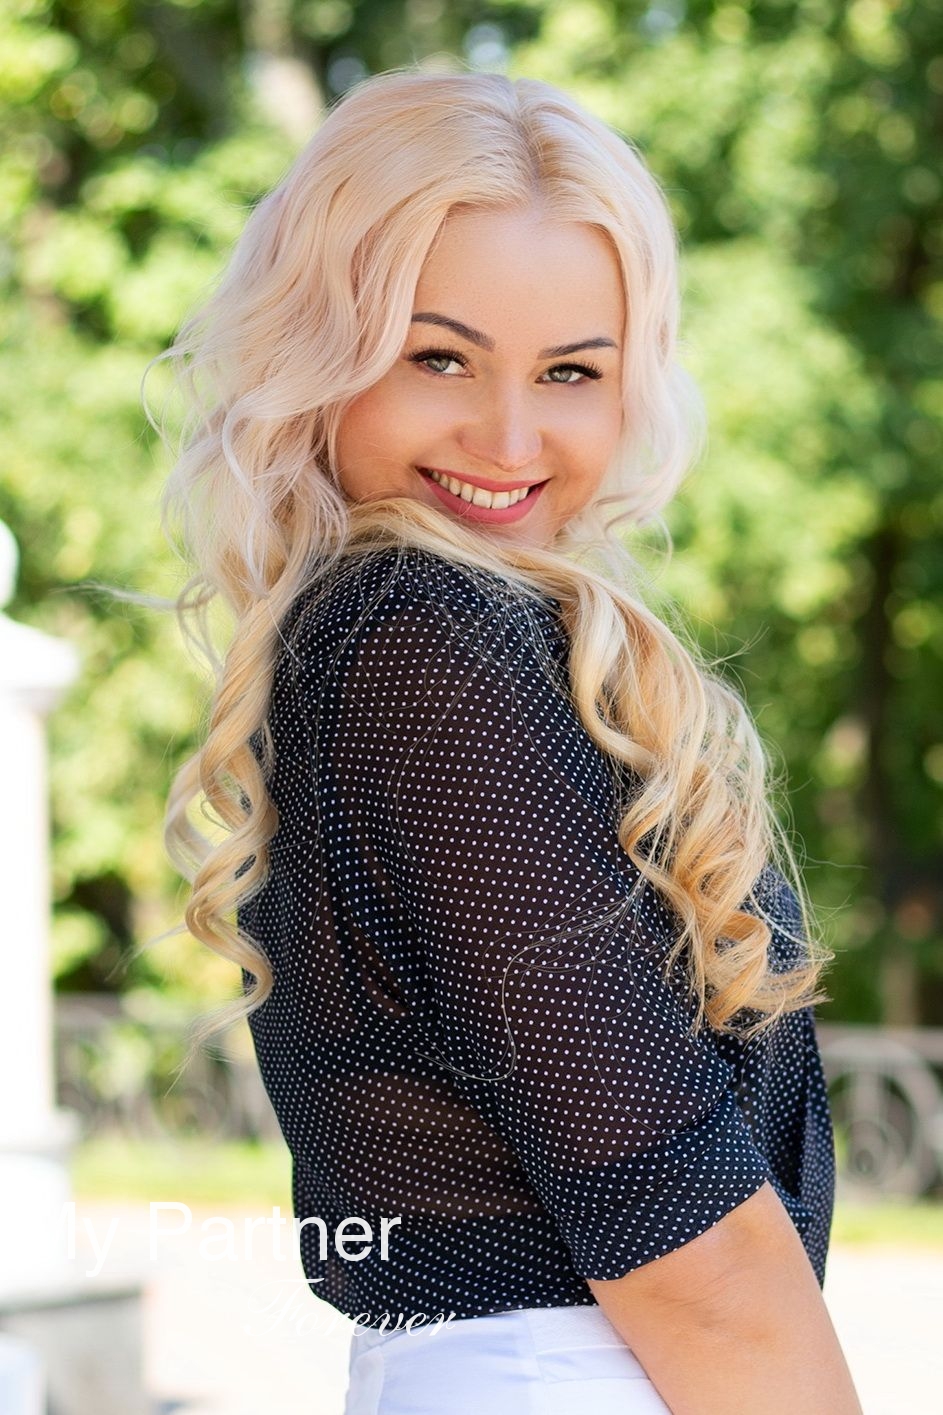 Charming Girl from Ukraine - Elena from Kiev, Ukraine